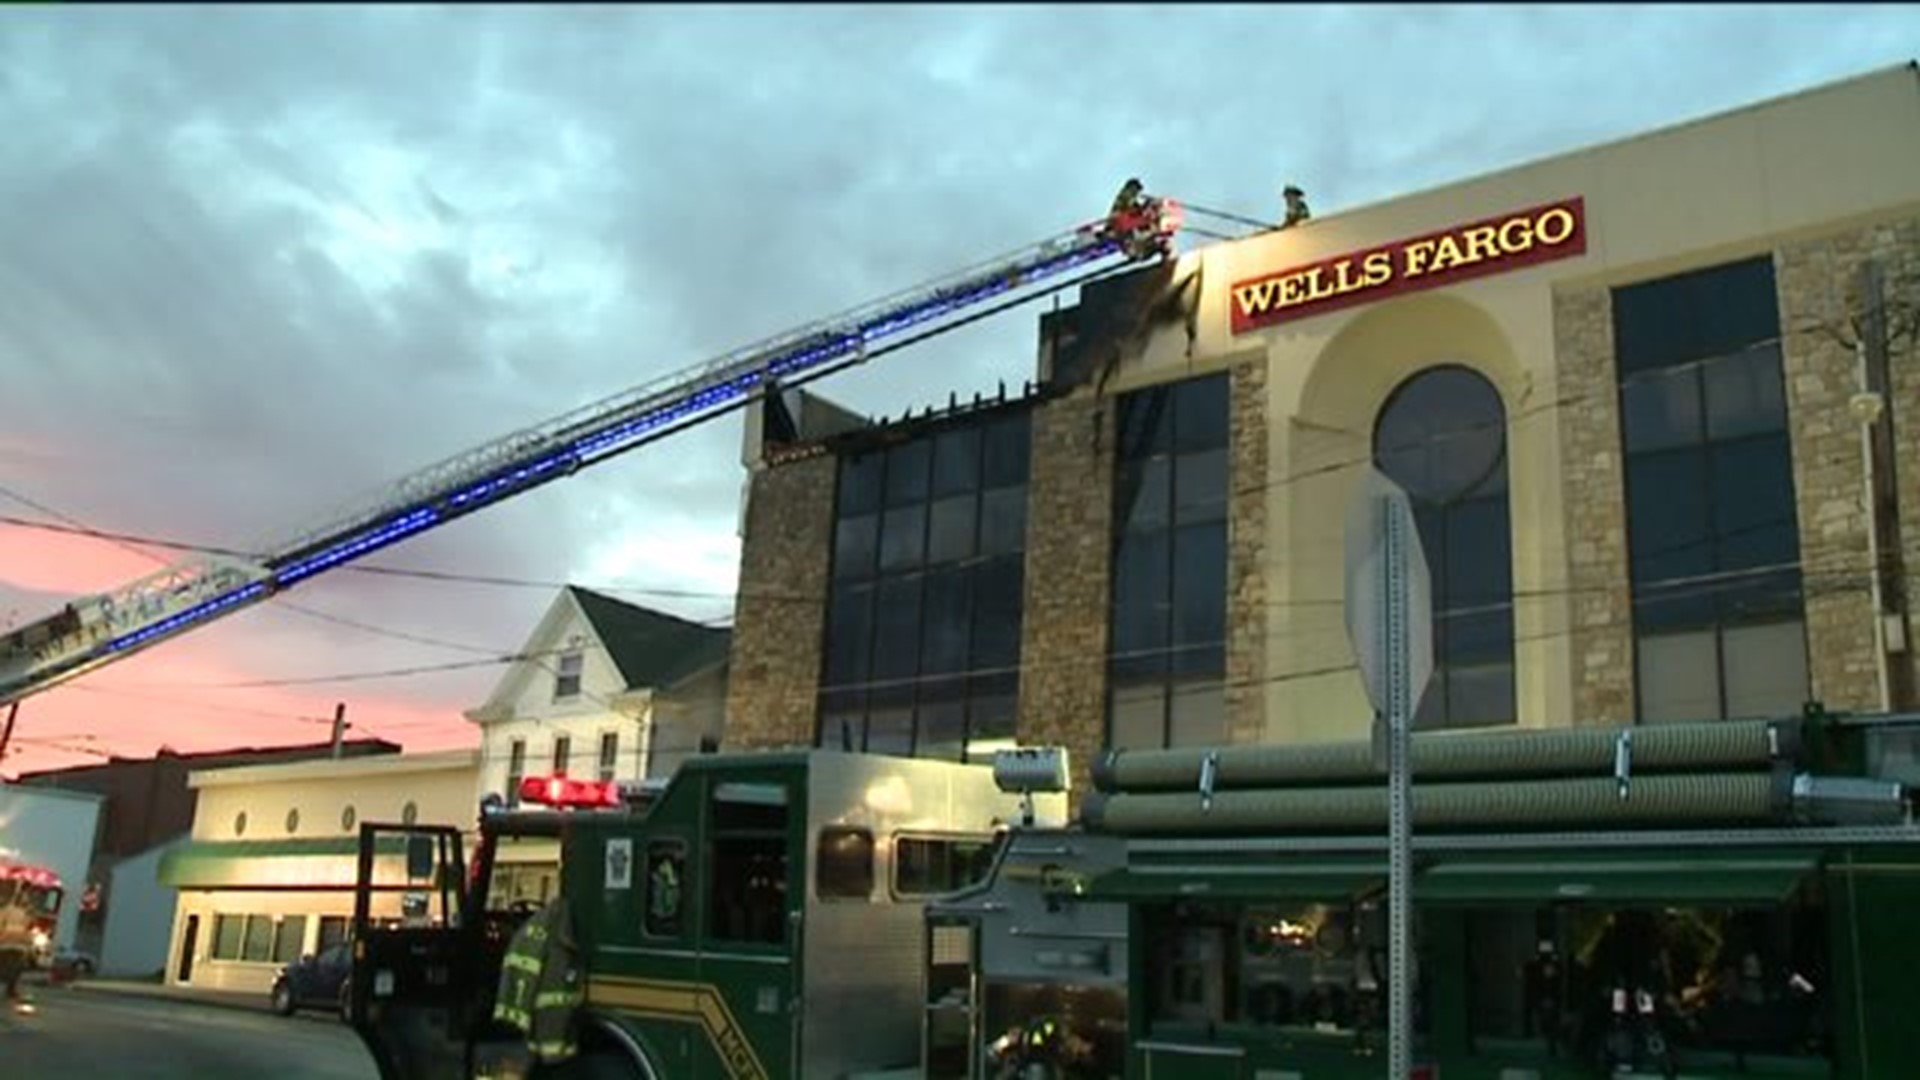 Fire at Wells Fargo Bank under Investigation